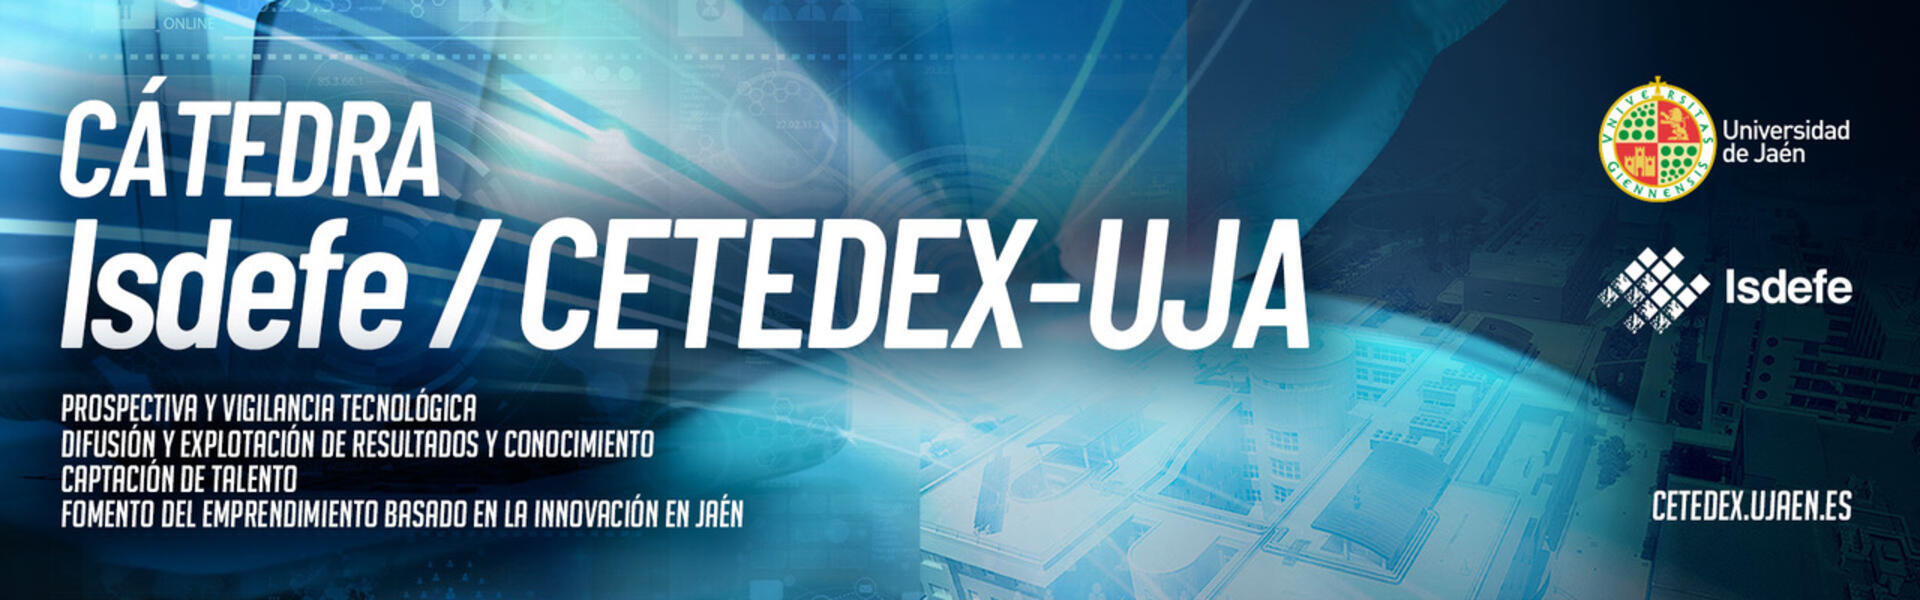 Banner Jornada Cátedra Isdefe/CETEDEX-UJA